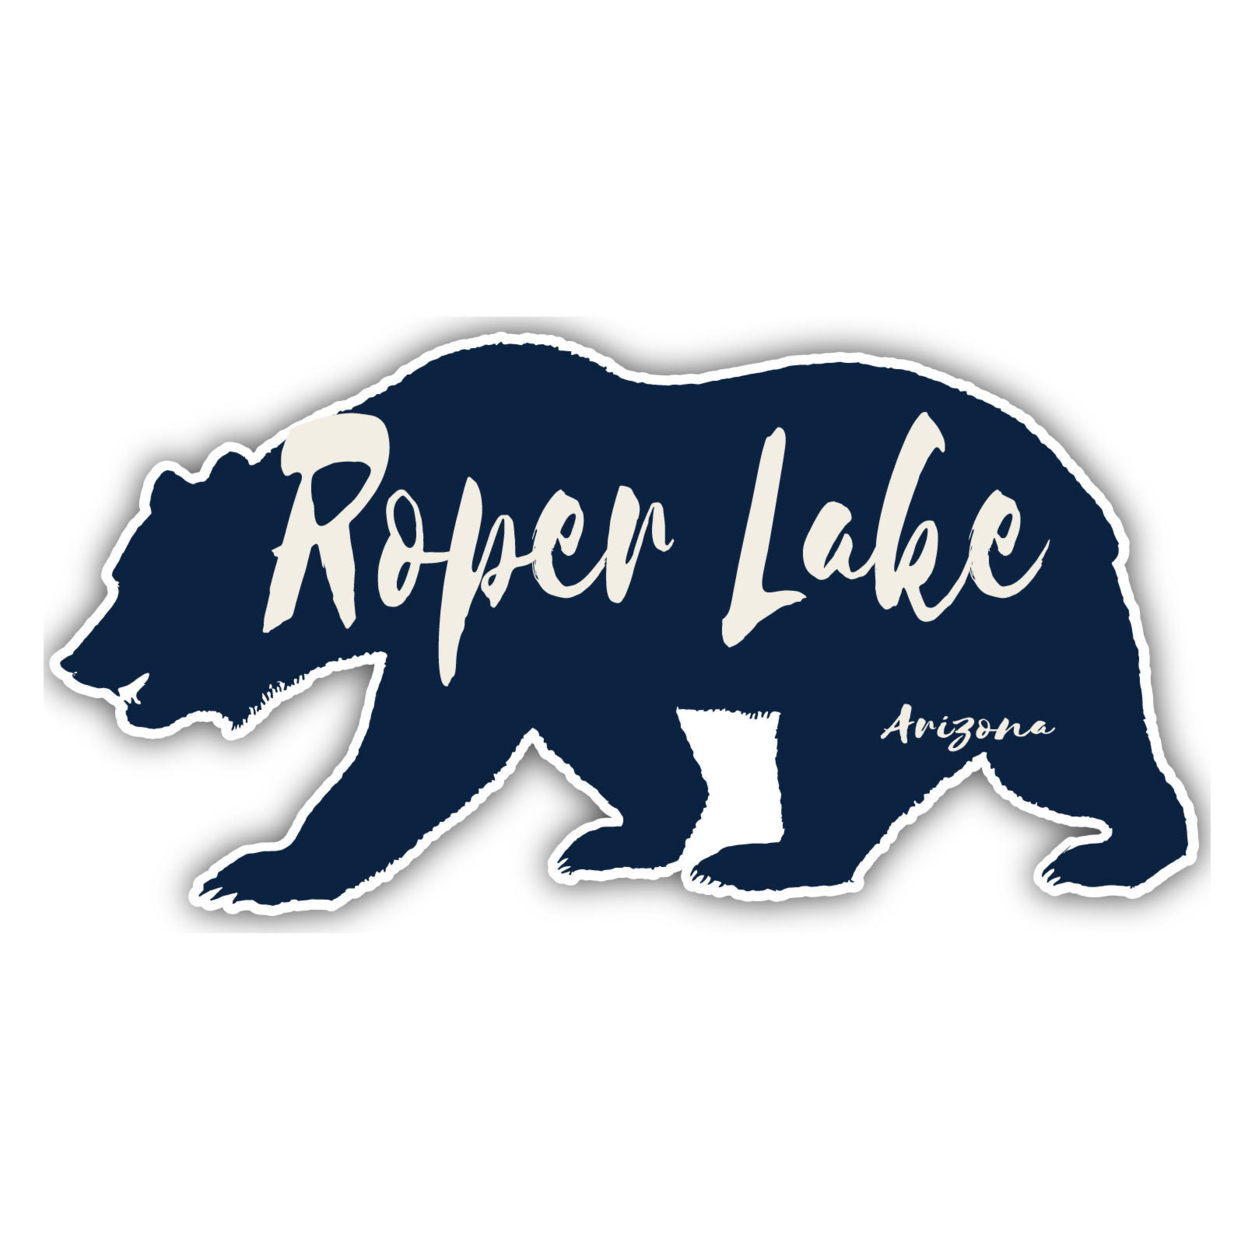 Roper Lake Arizona Souvenir Decorative Stickers (Choose Theme And Size) - Single Unit, 4-Inch, Bear